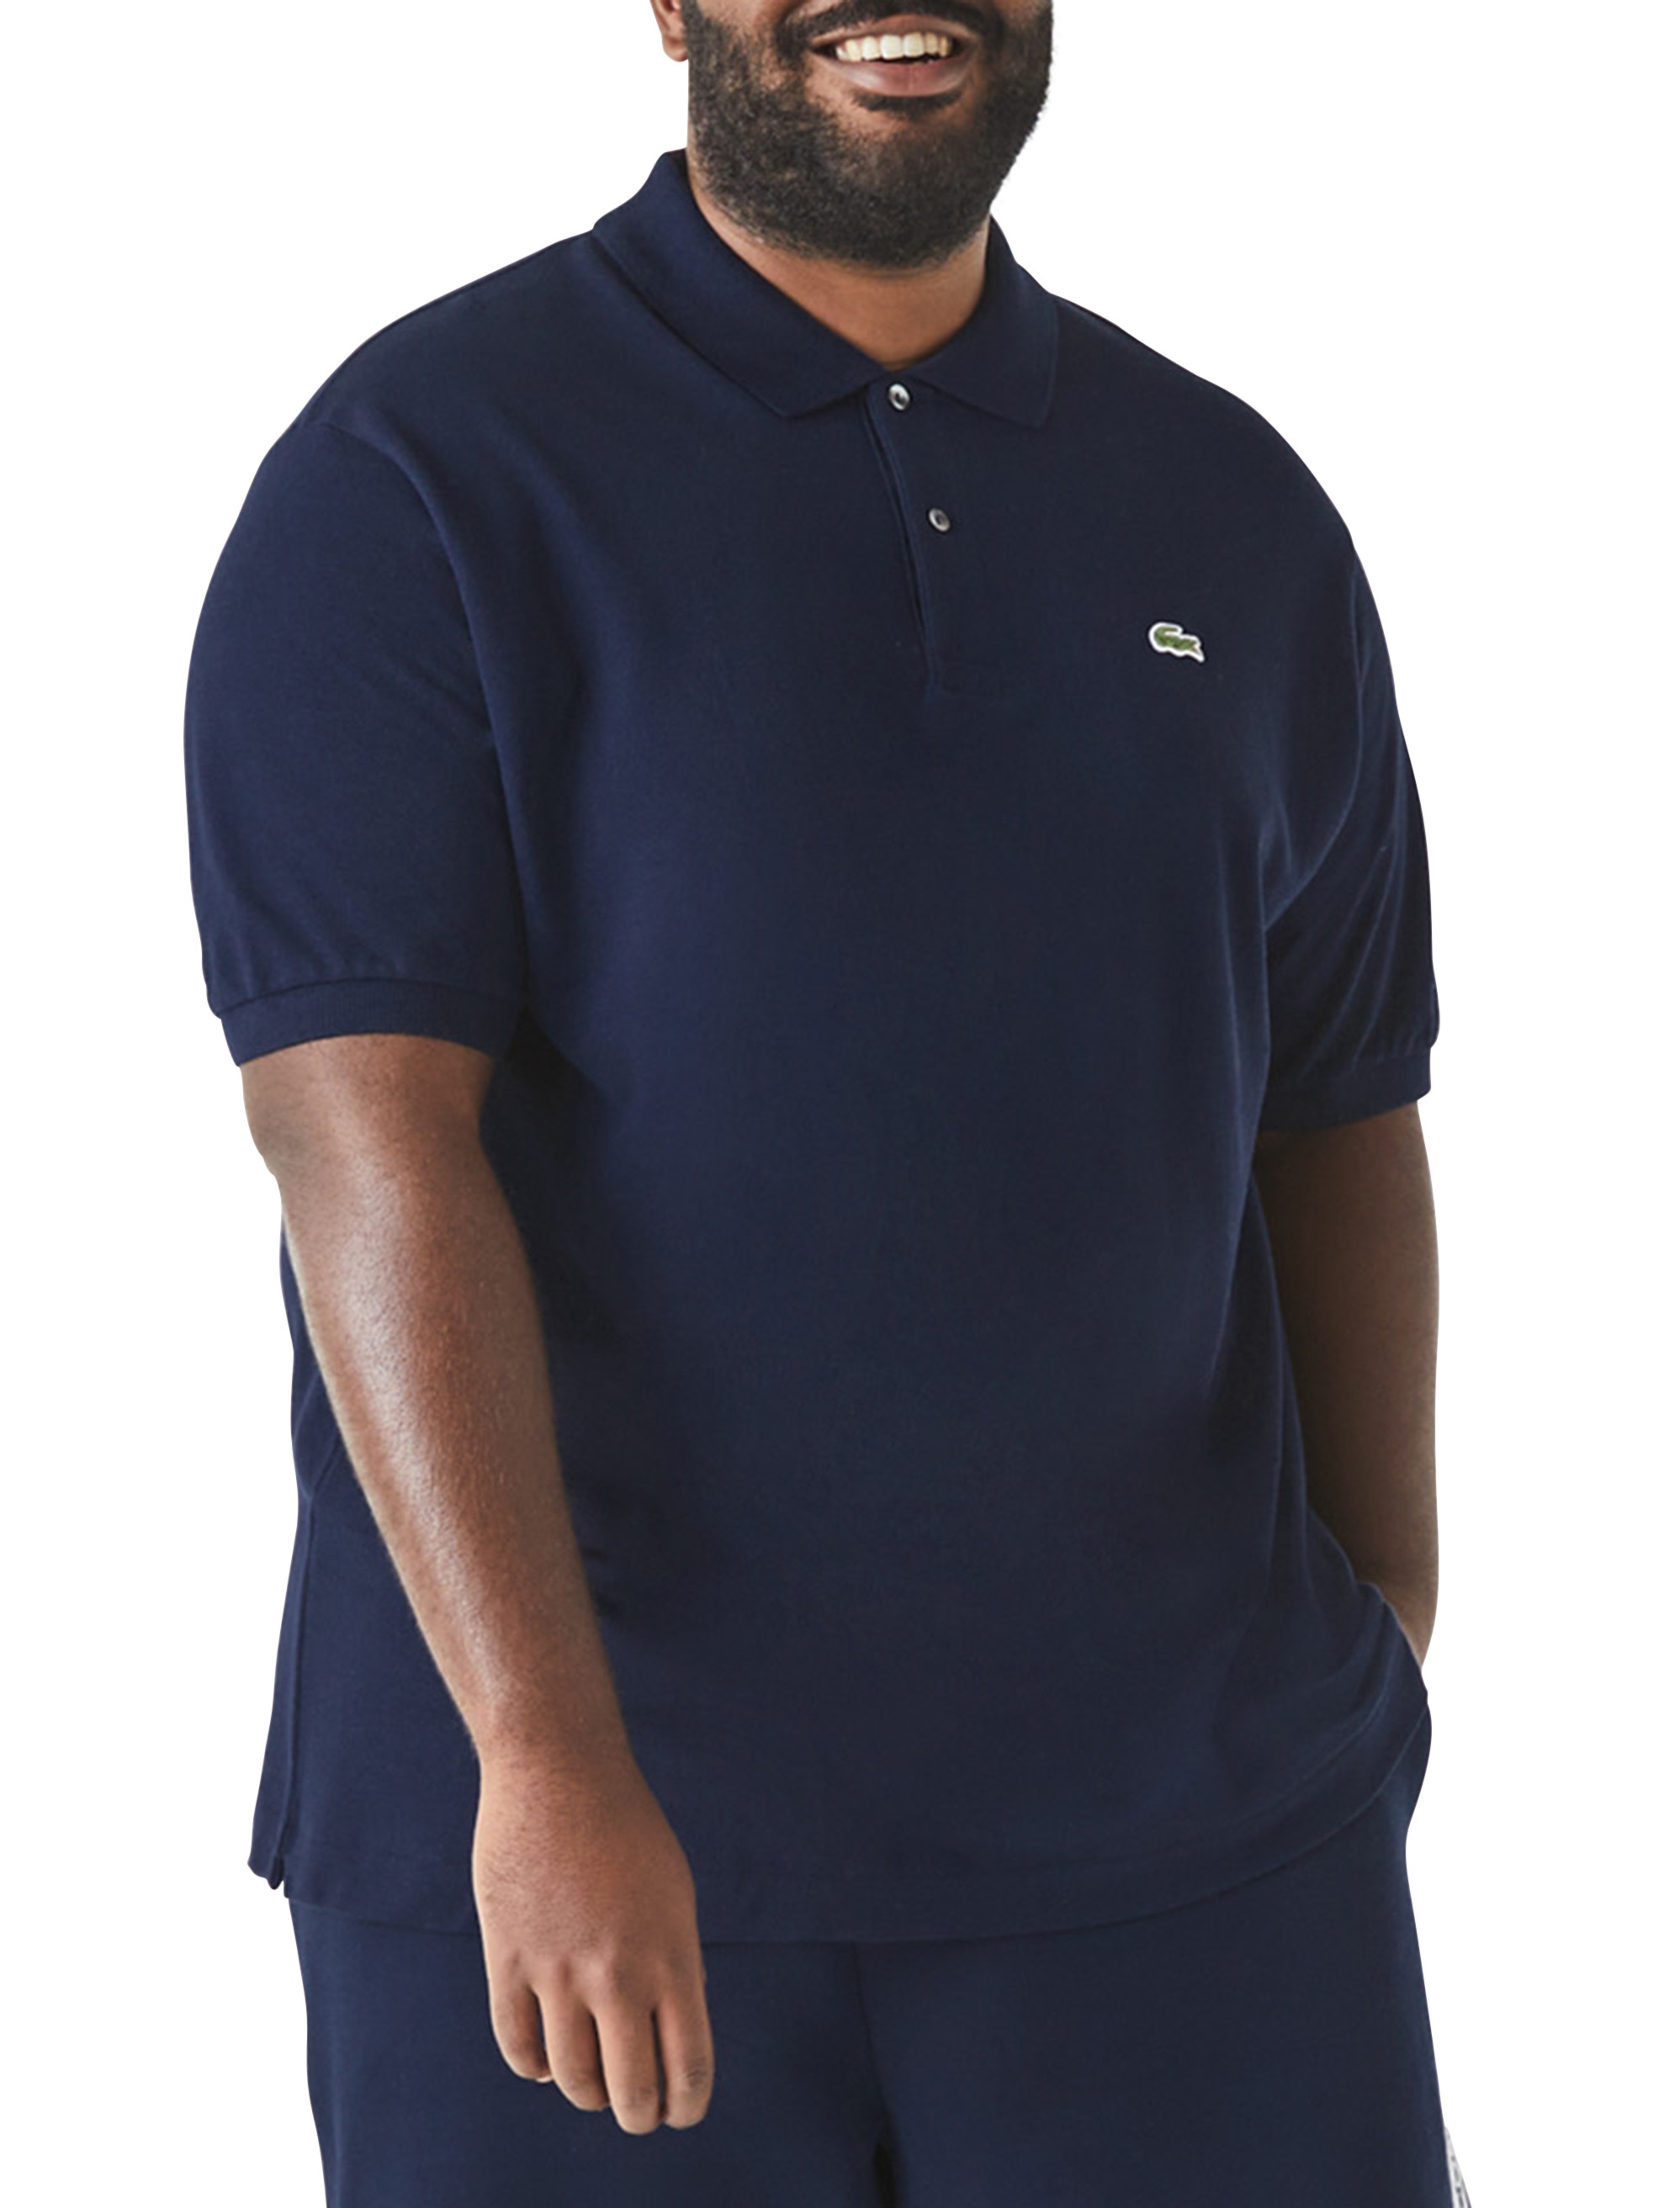 Big + Tall | Polo Shirt DXL Classic Lacoste | Pique